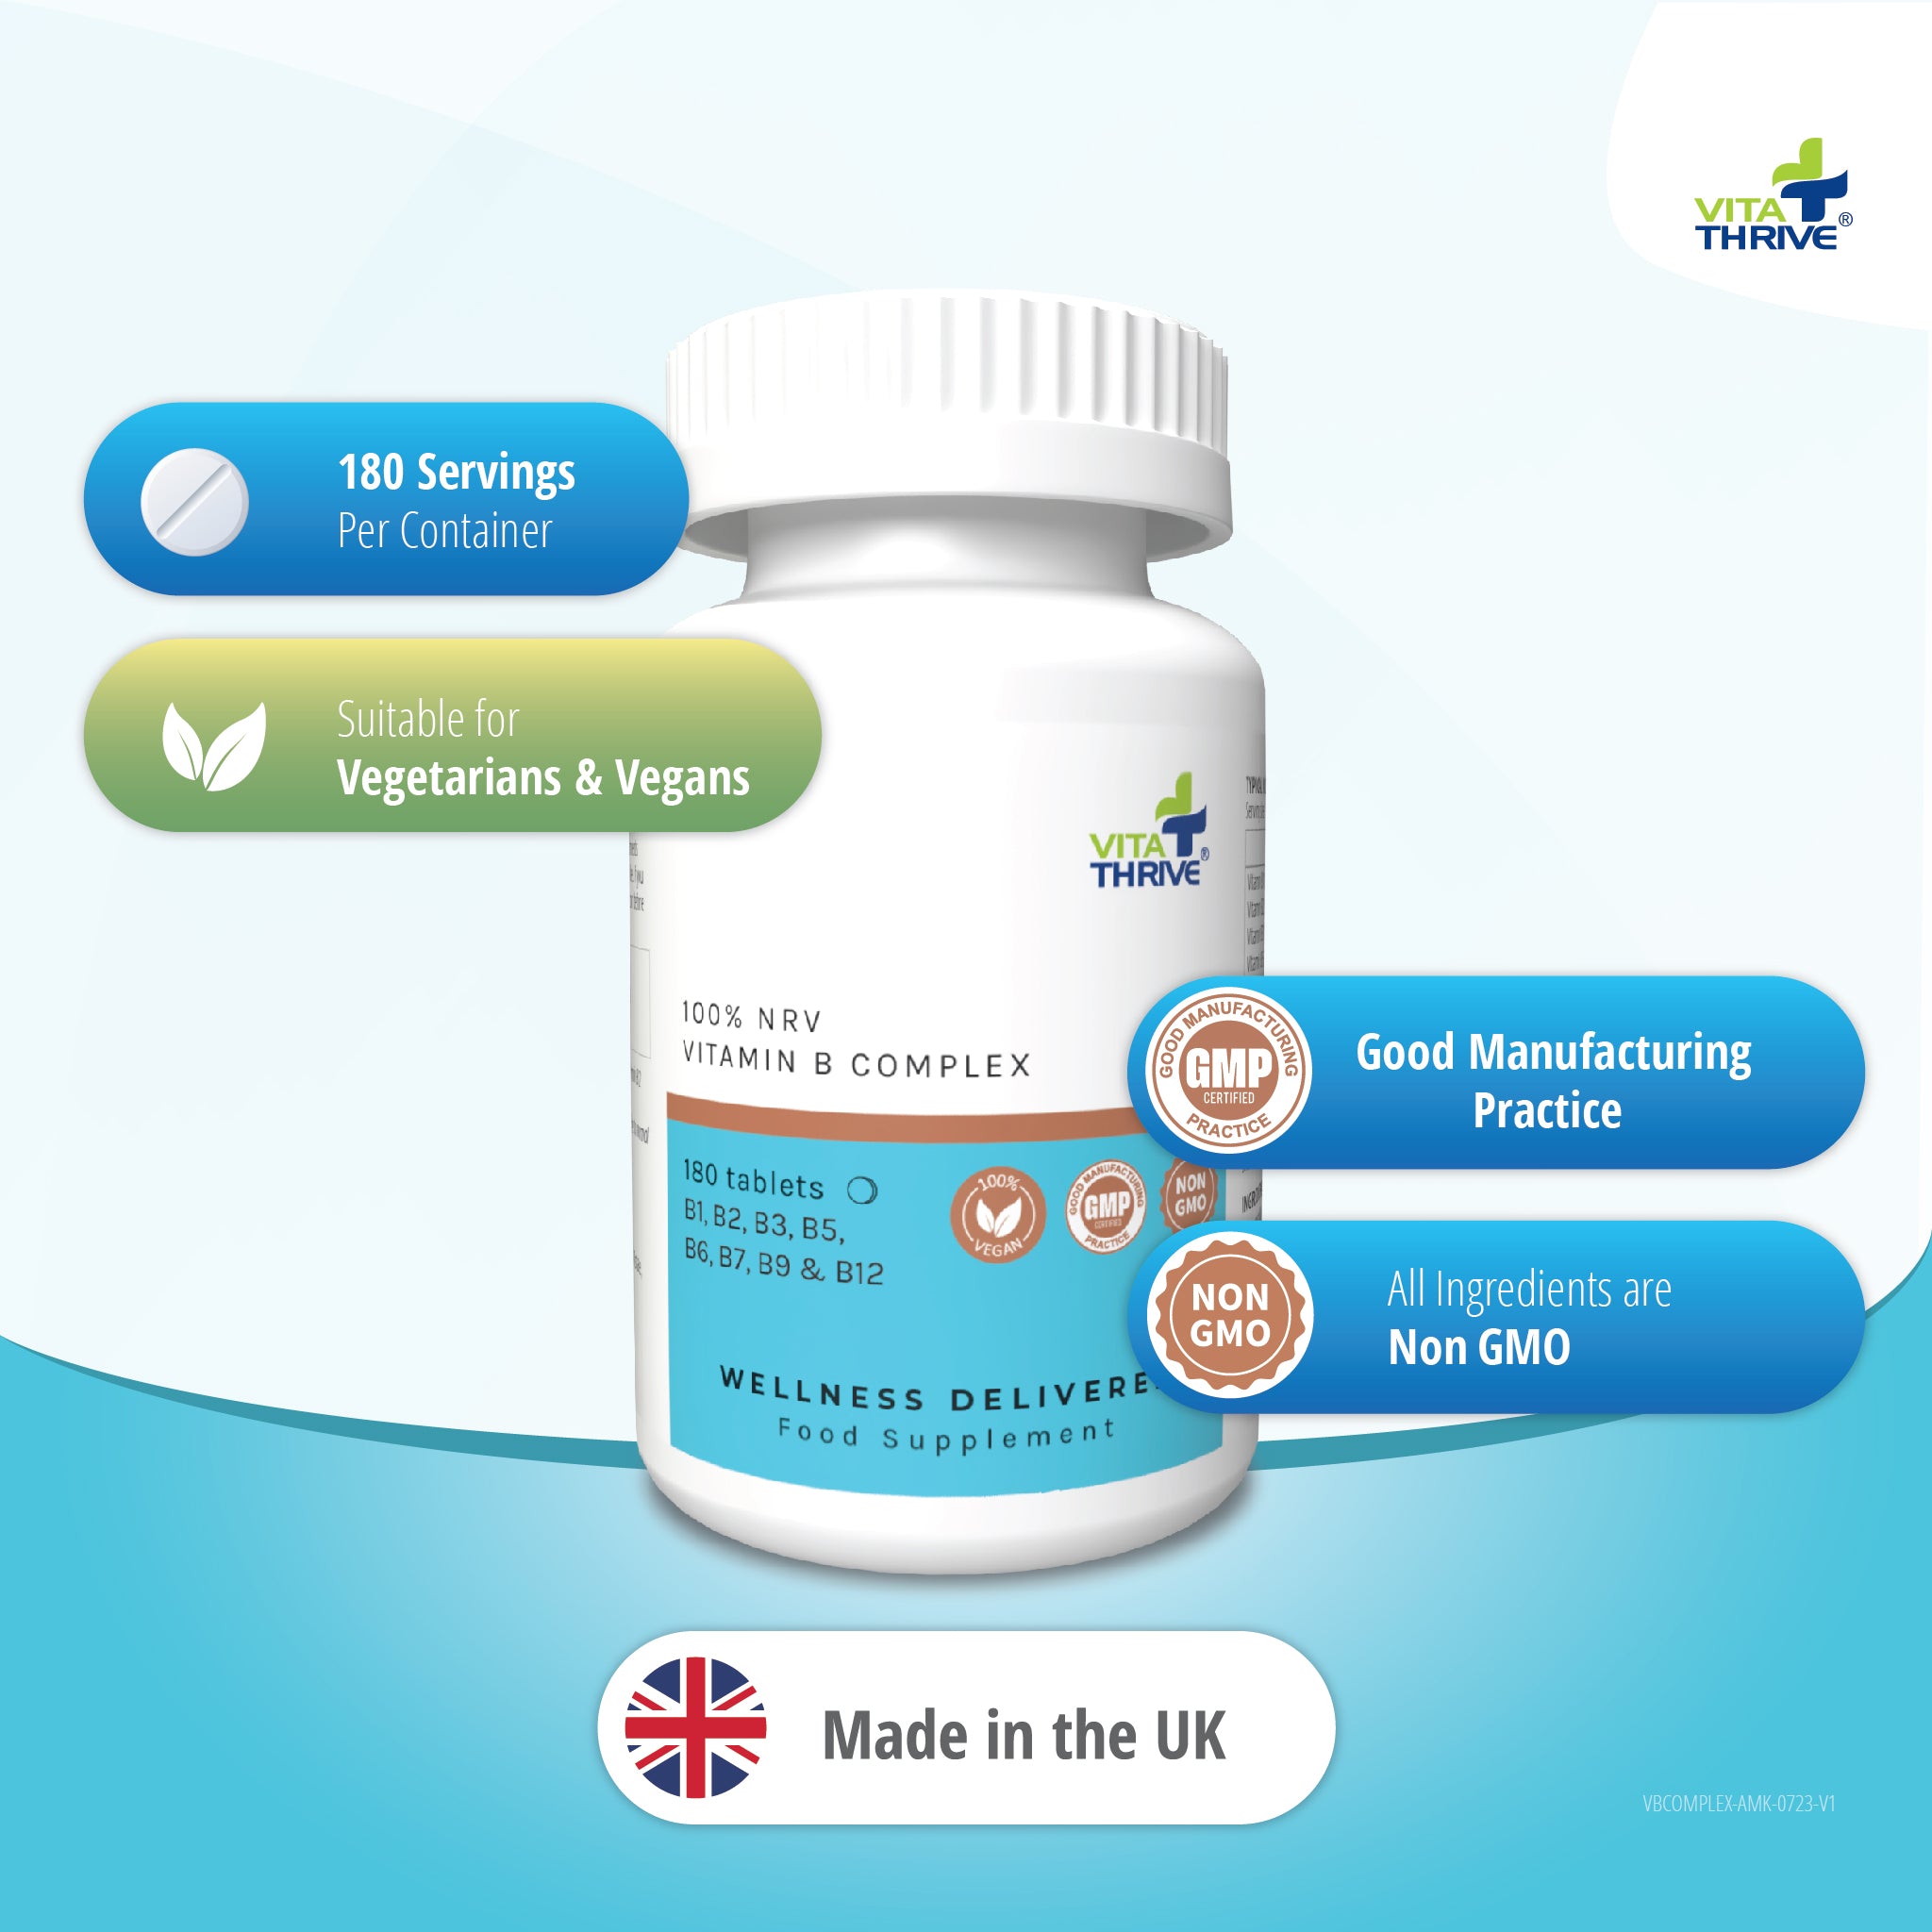 VitaThrive® Vitamin B Complex (100% NRV) Tablets